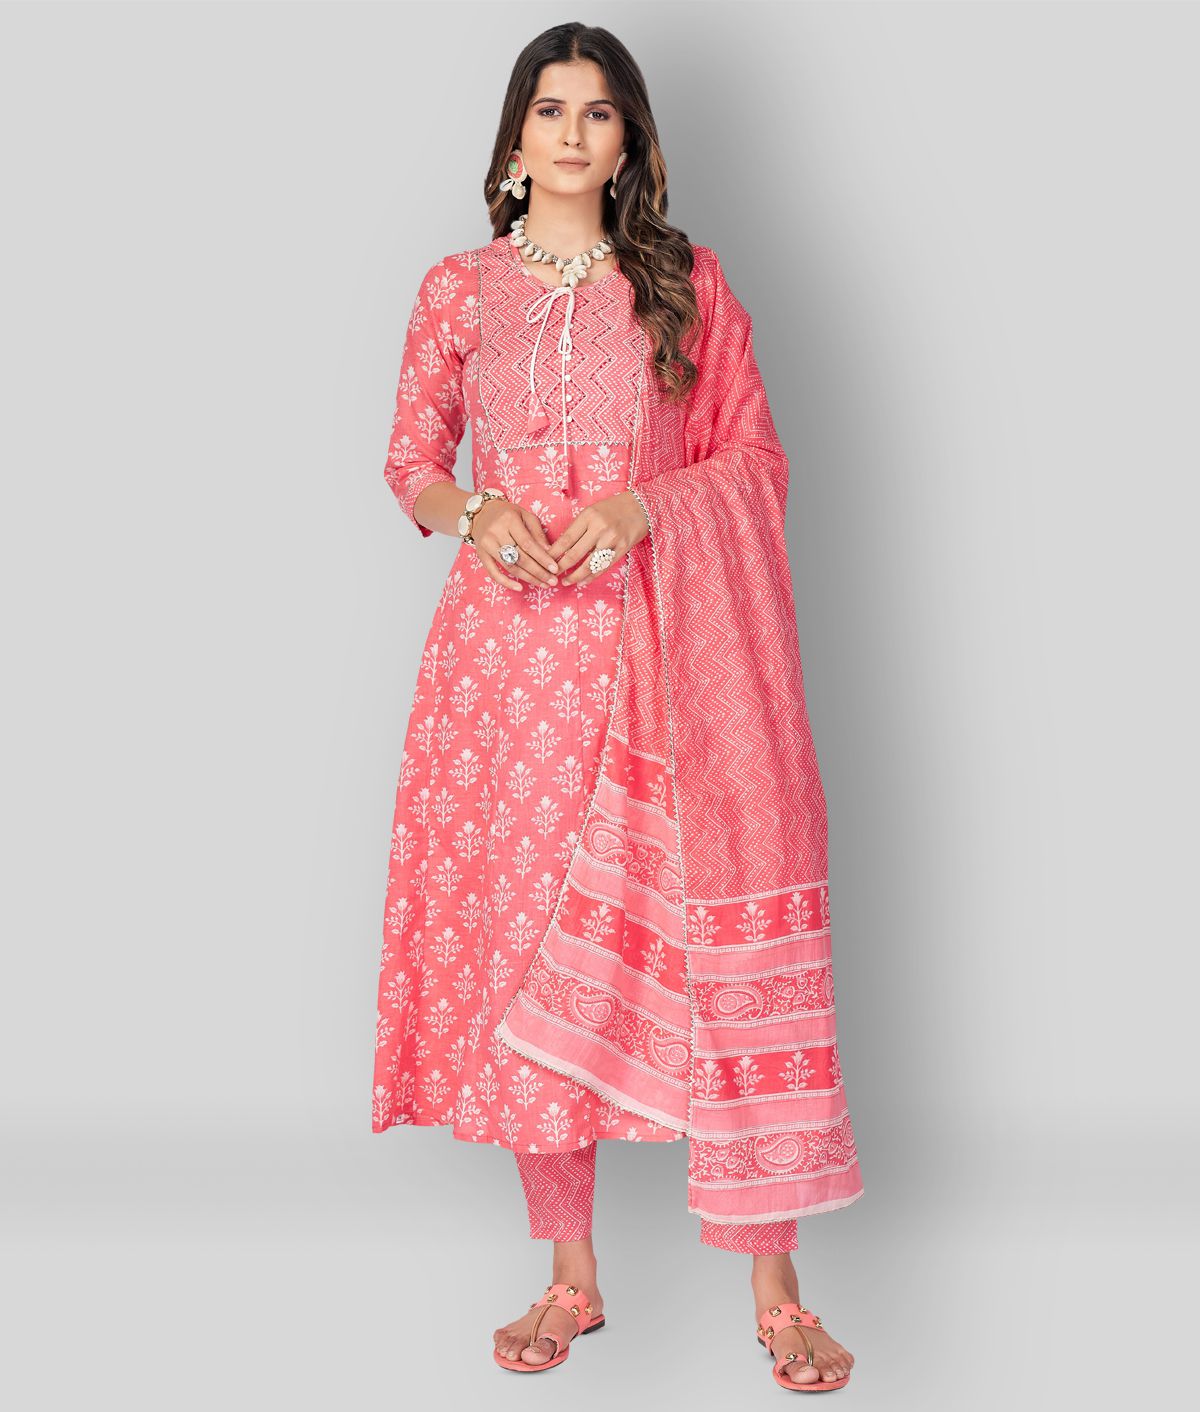     			Vbuyz - Pink A-line Cotton Women's Stitched Salwar Suit ( Pack of 1 )